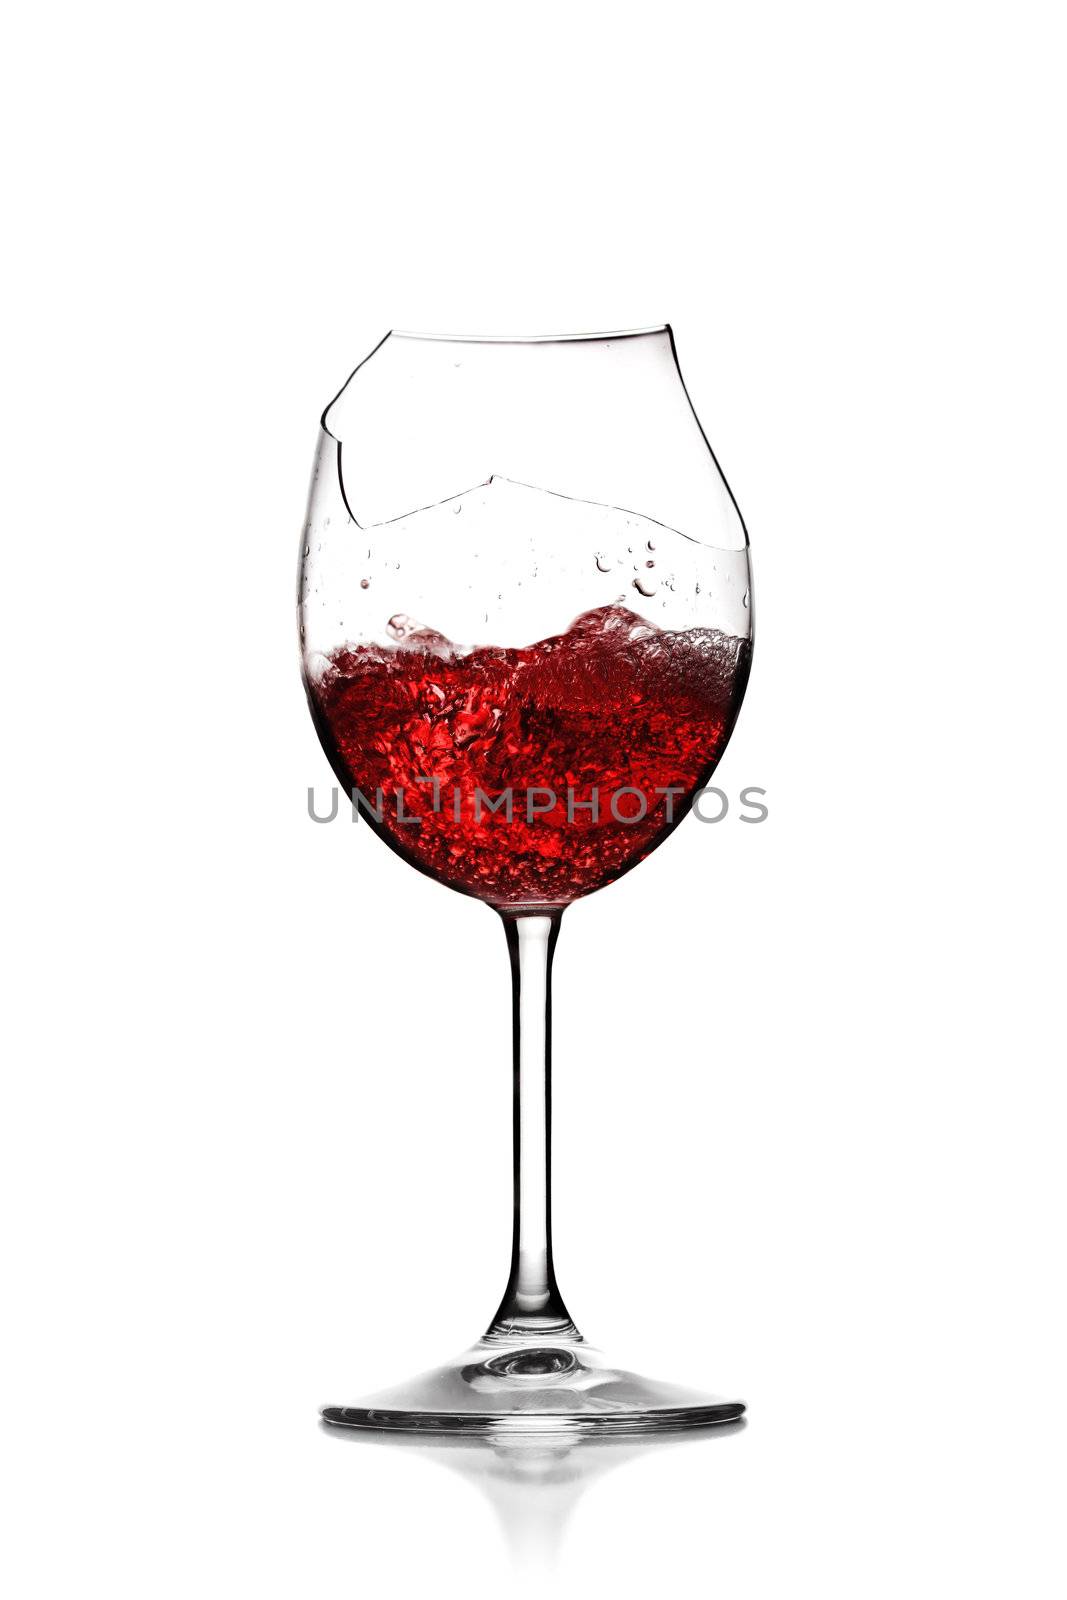 red wine in broken glass by kokimk